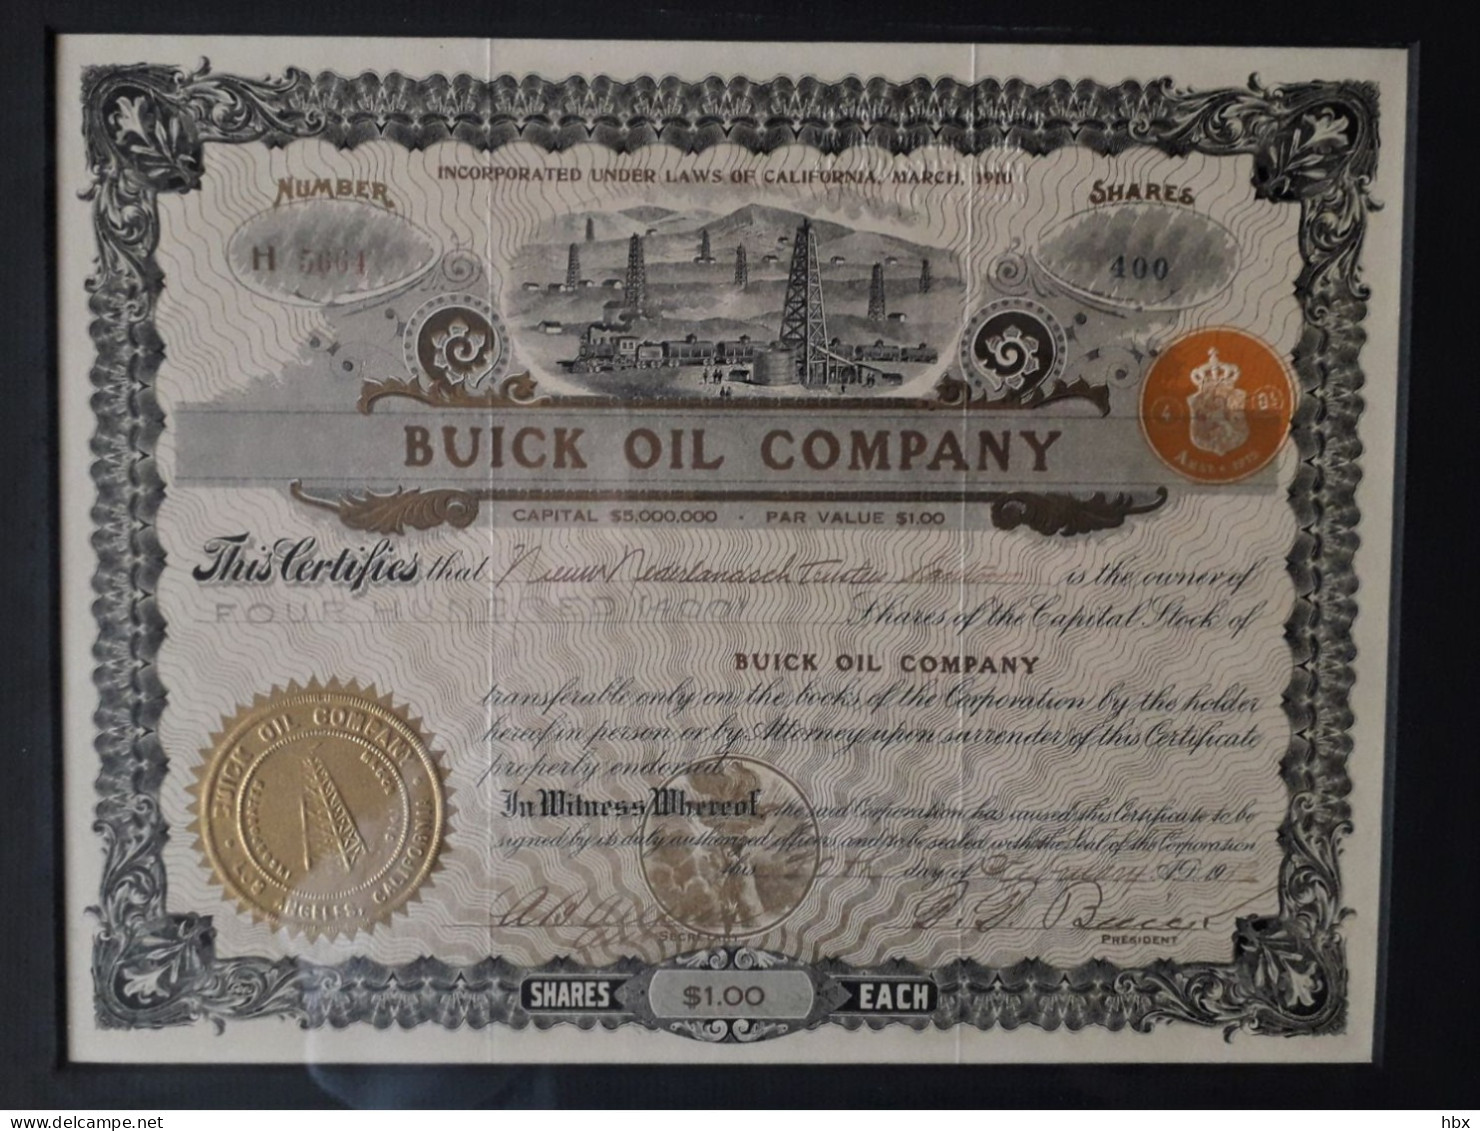 Buick Oil Company - 1912 - David Dunbar Buick Signature - Automotive History - Oil